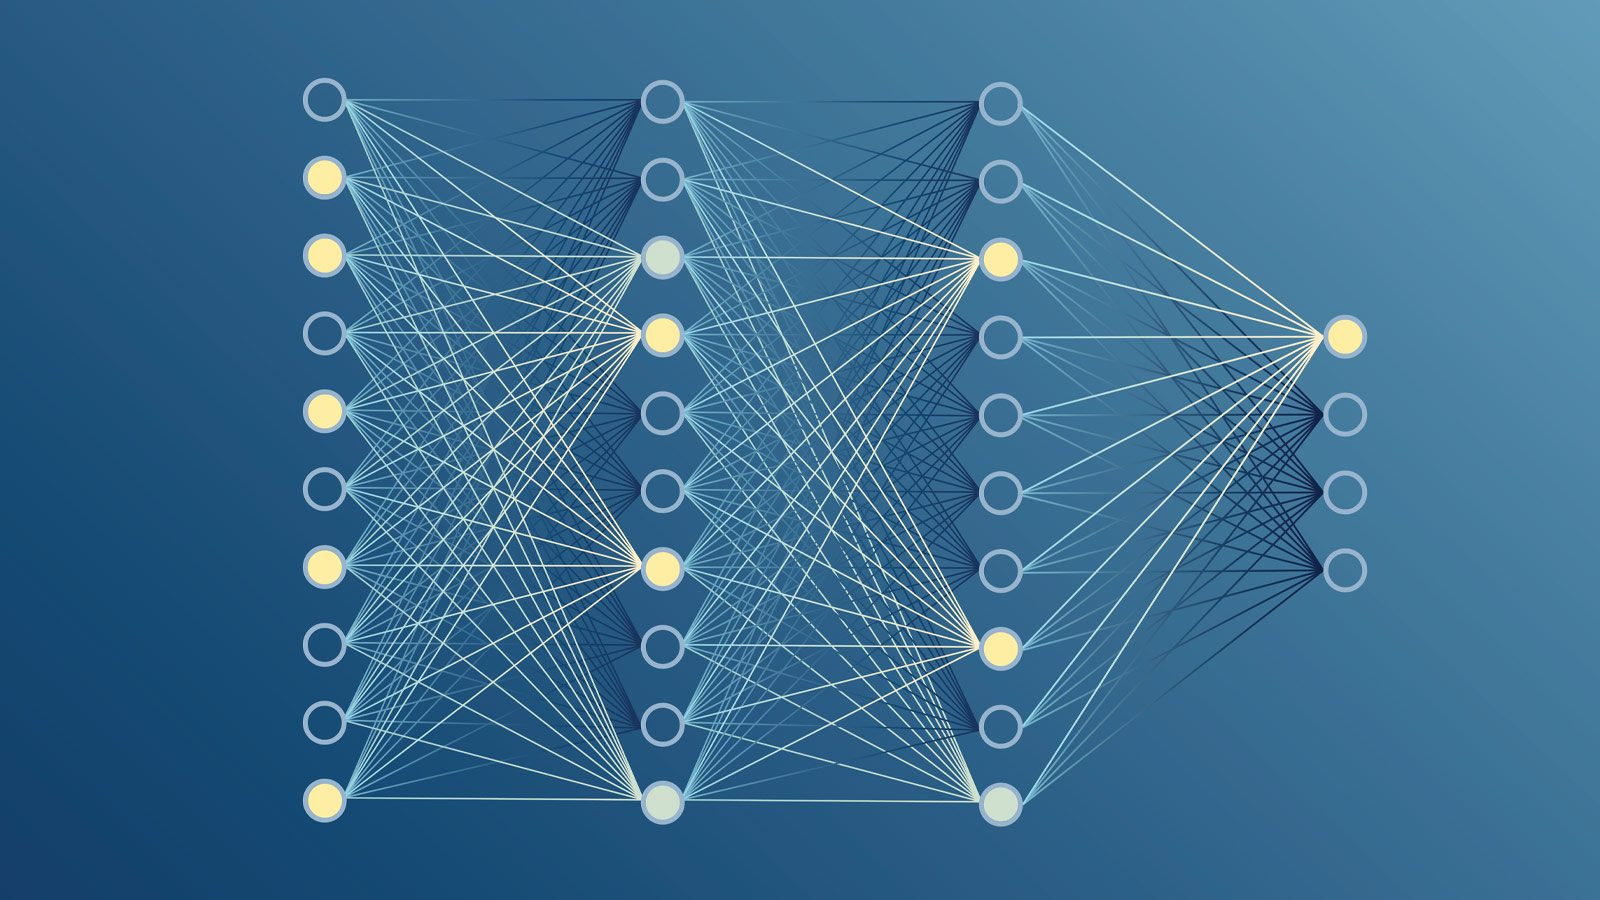 interlinking nodes in a neural network